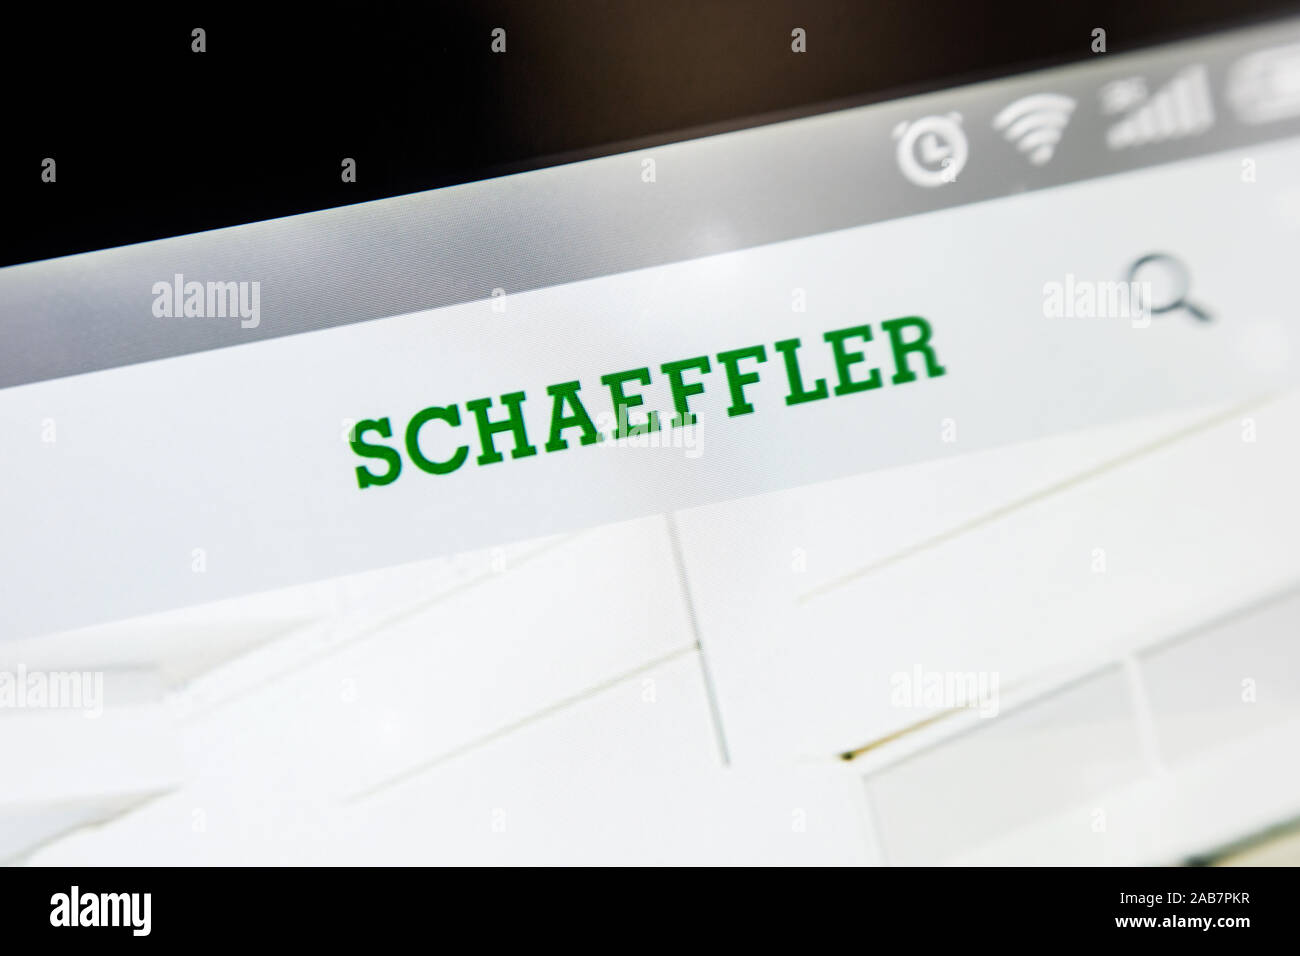 Berdyansk, Ukraine - 3. April 2019: Schaeffler Homepage. Schaeffler Logo sichtbar auf dem Bildschirm des Telefons. Stockfoto